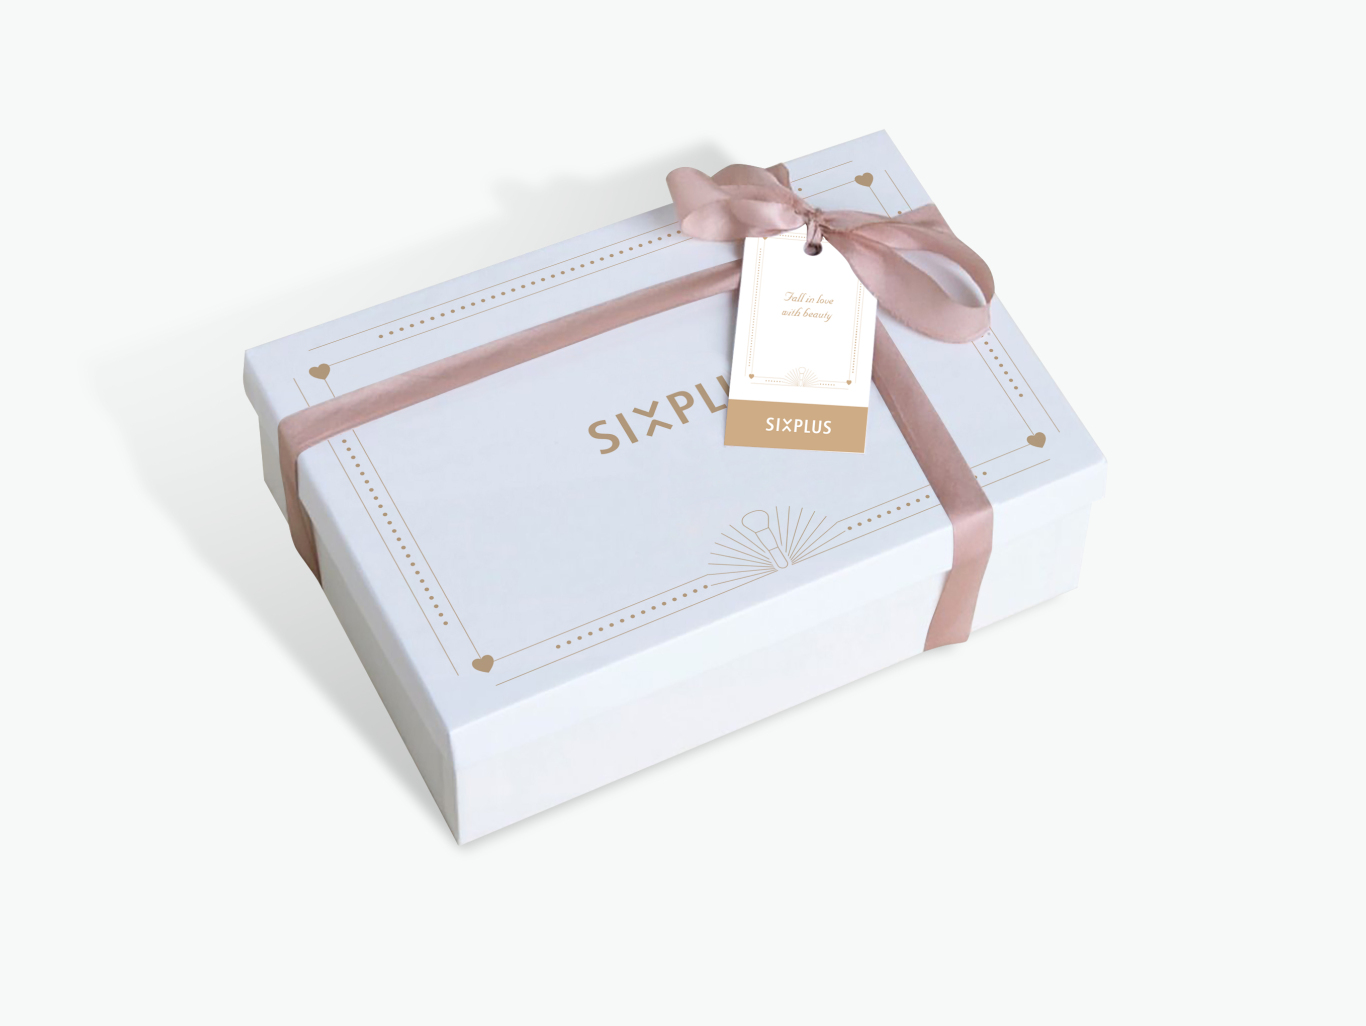 SIXPLUS 美妝產品禮盒包裝設計圖1